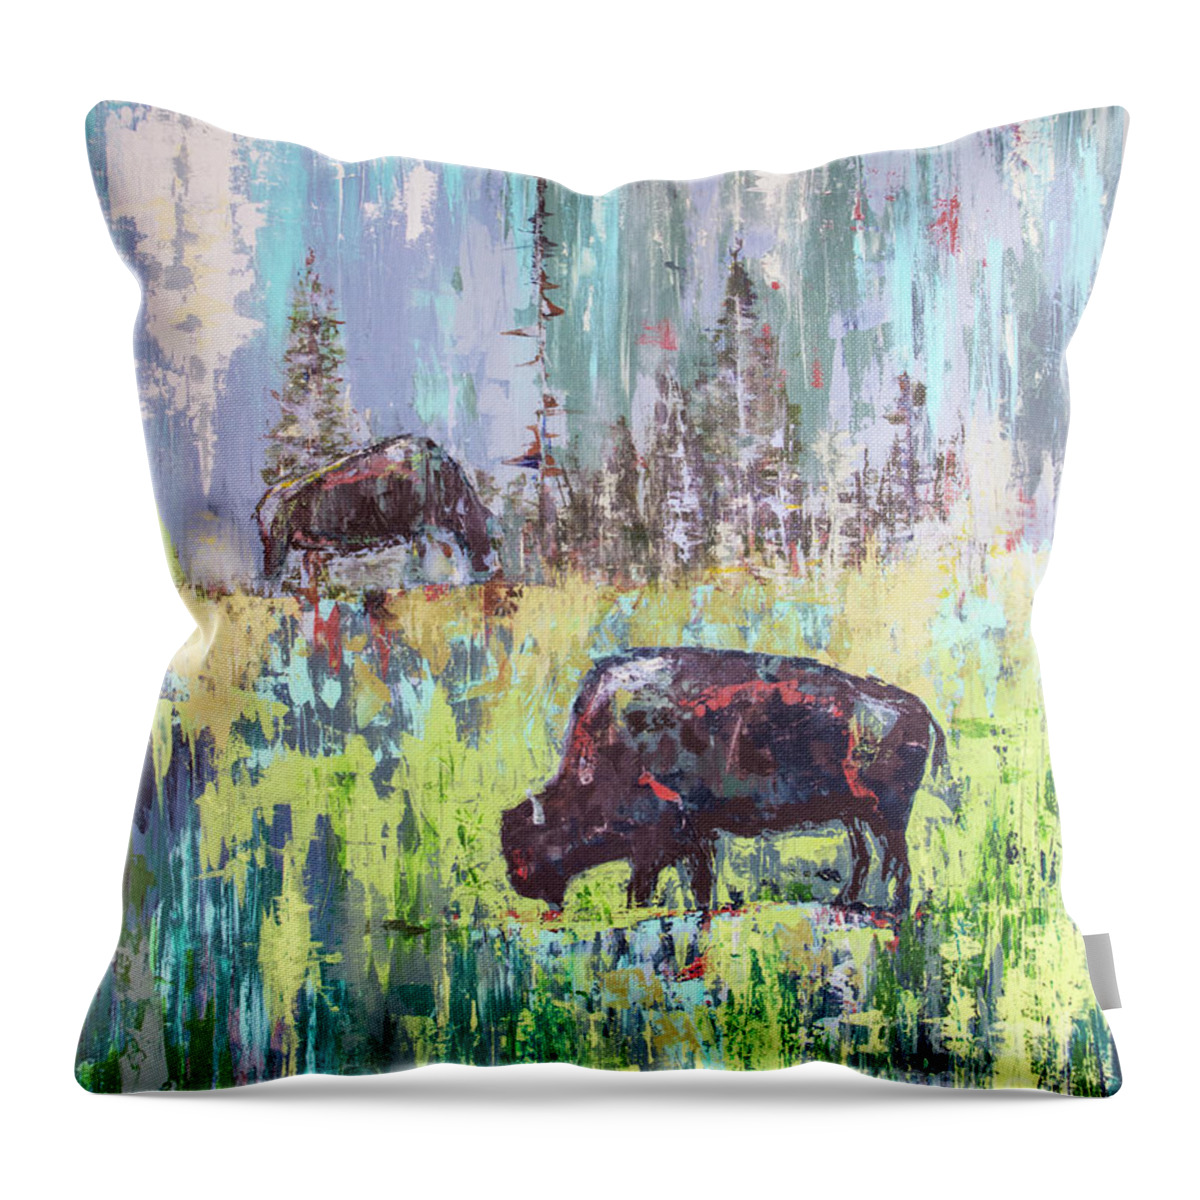 Buffalo Throw Pillow featuring the painting Buffalo Grazing by Cheryl McClure